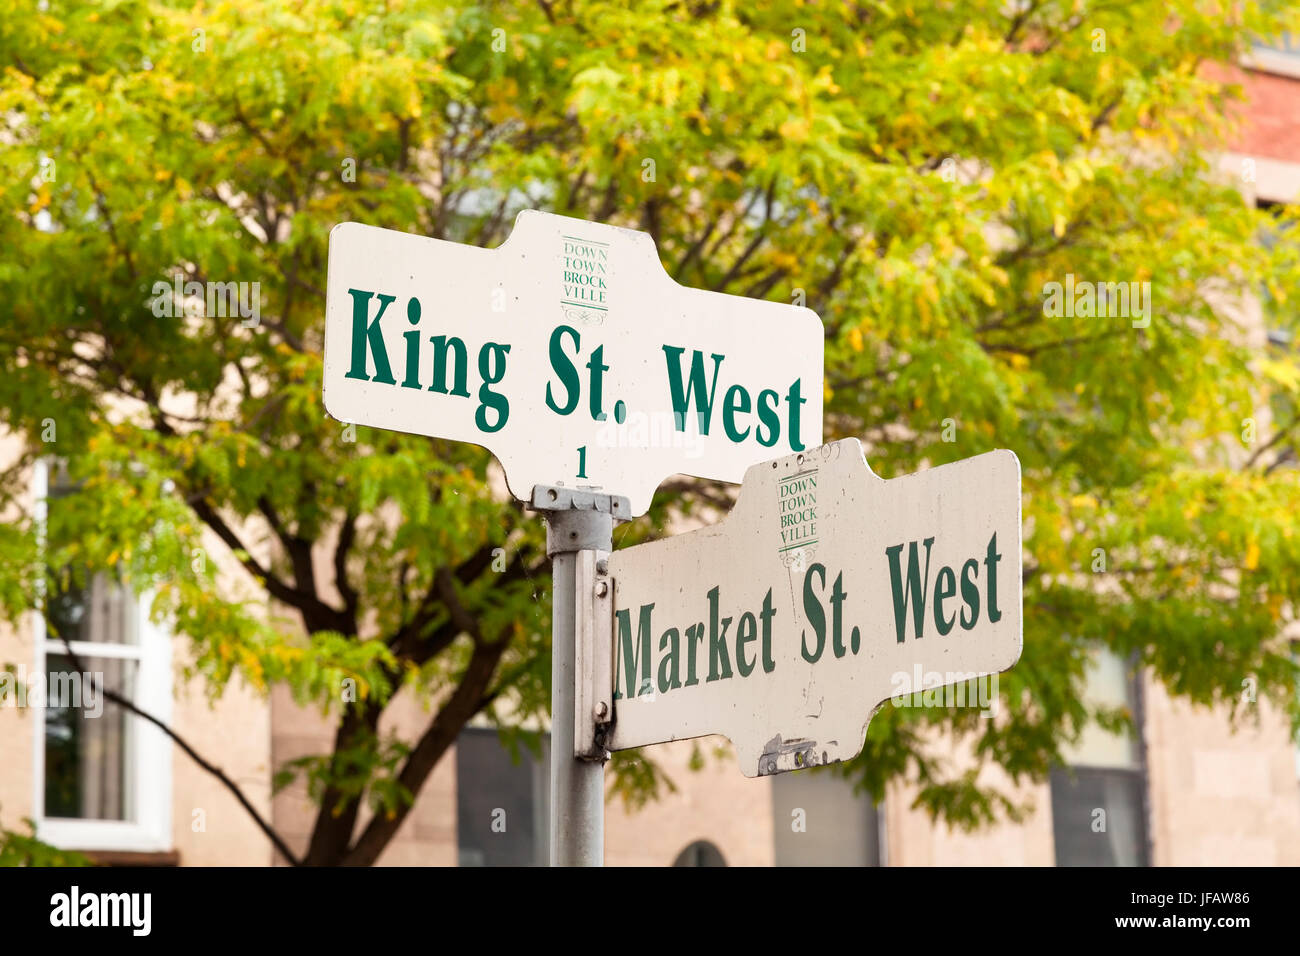 Indicazioni stradali per King Street e Market Street in downtown Brockville, Ontario, Canada. Foto Stock